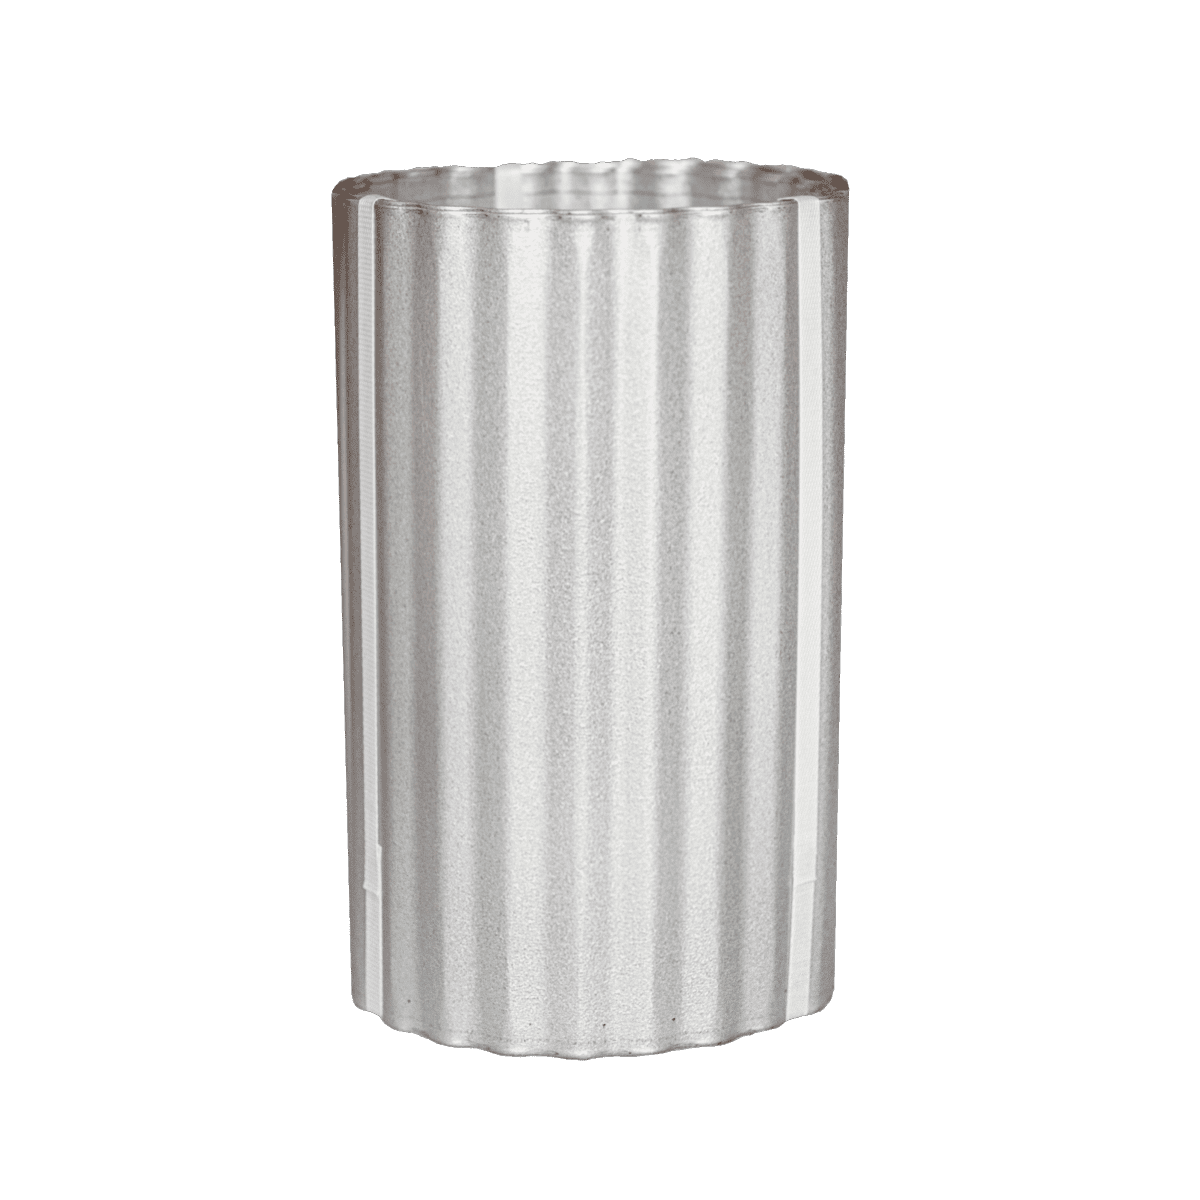 Corrugated Metal Landscape Edging – 12in  W x 10ft L / Galvalume